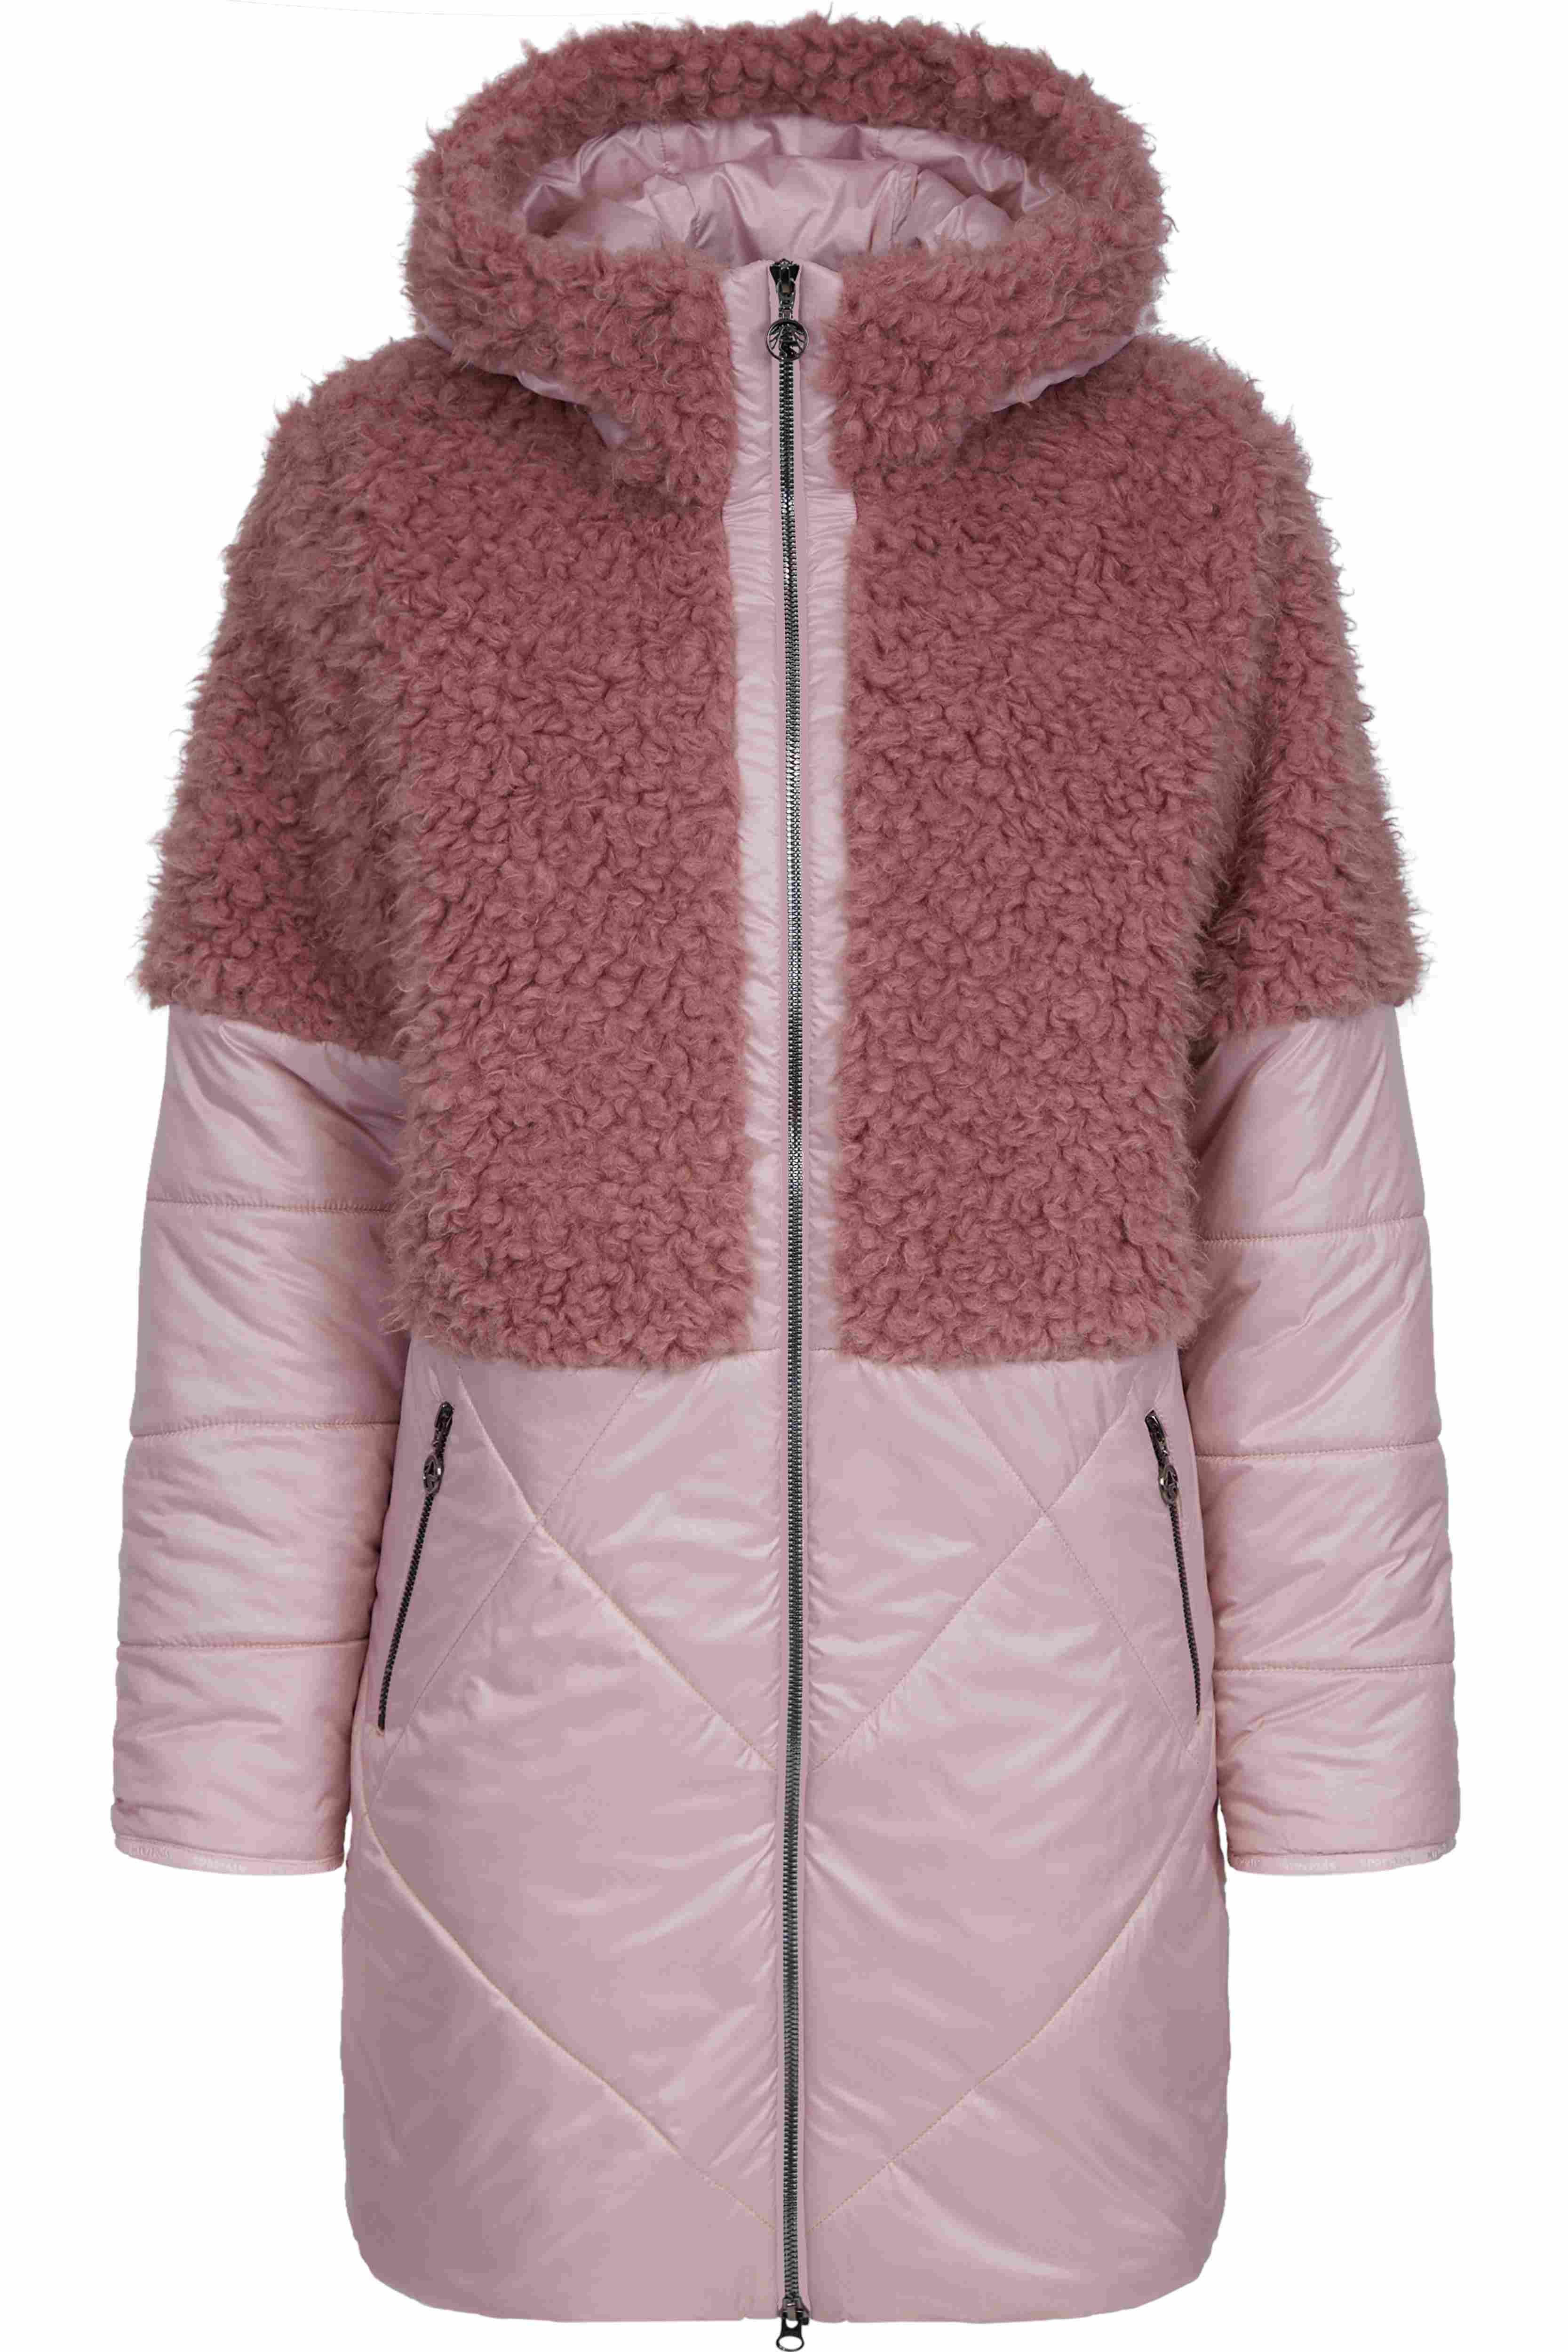 Sportalm kabát Rab m.K. dawn pink Velikost: 36